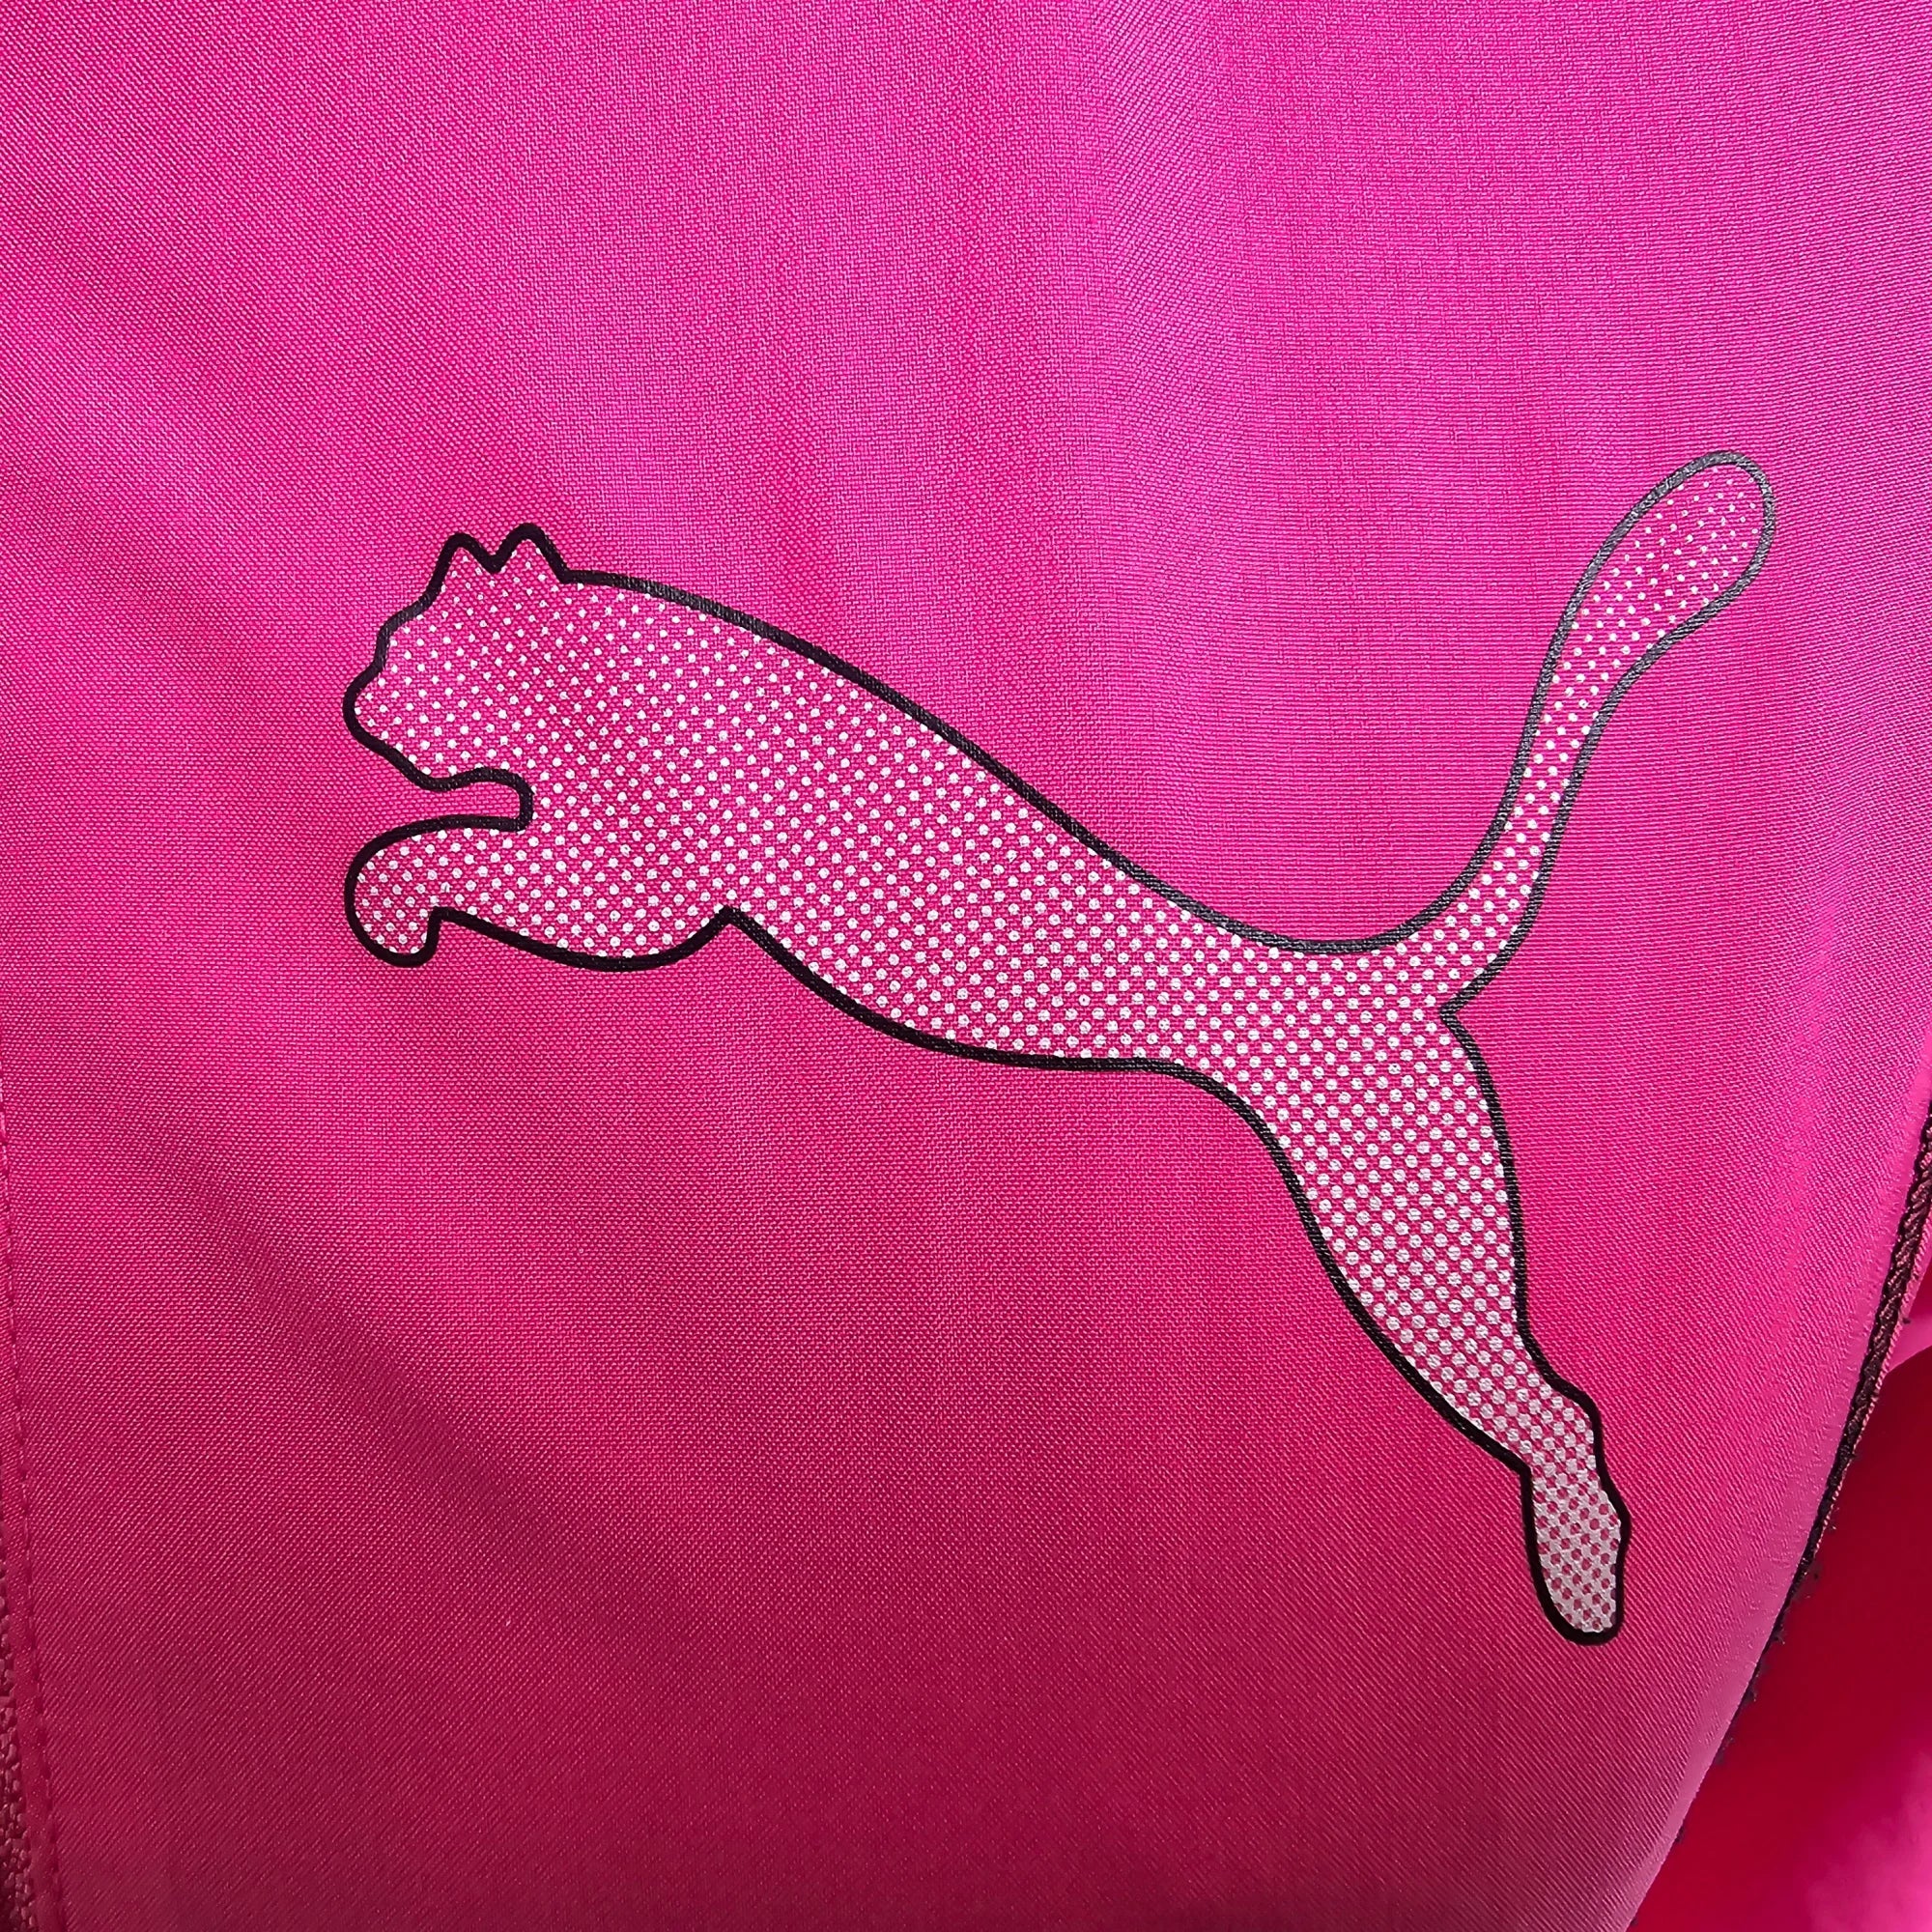 Puma Womens Track Top Tracksuit Full Zip Pink UK 32/34